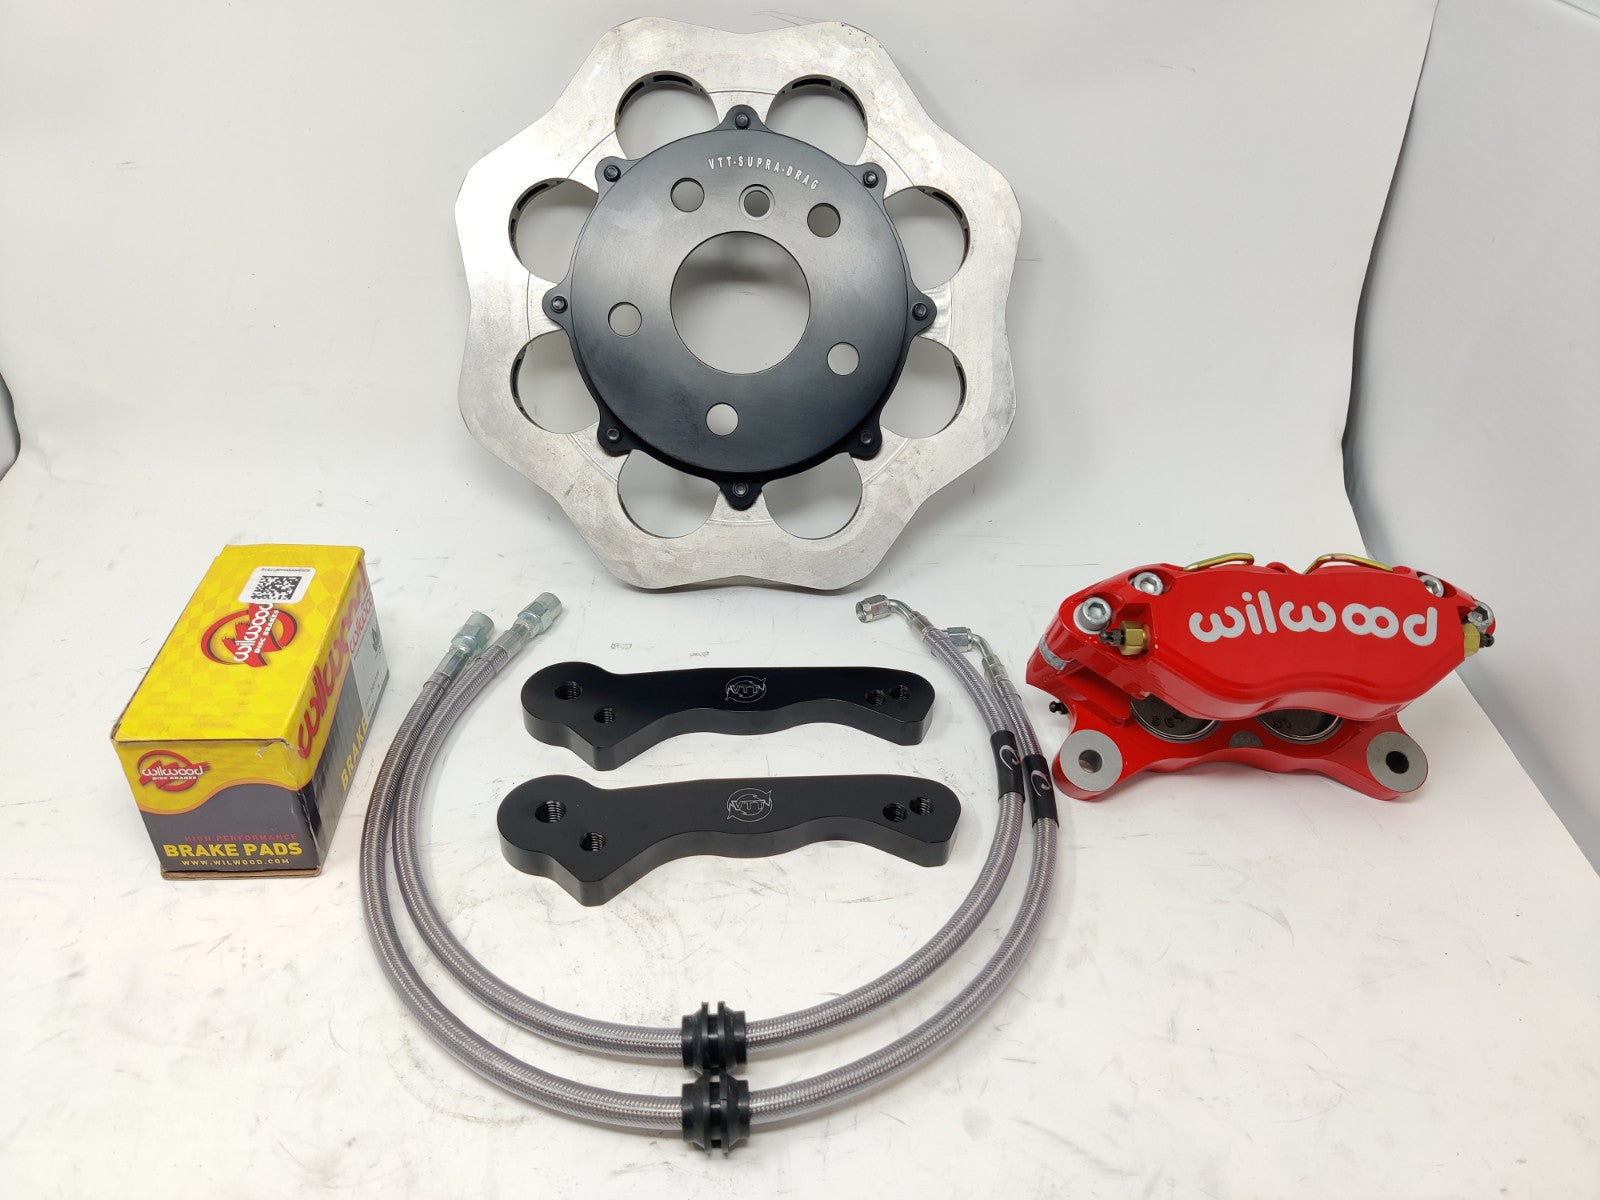 VTT Brake Kits Rotors/Hats only